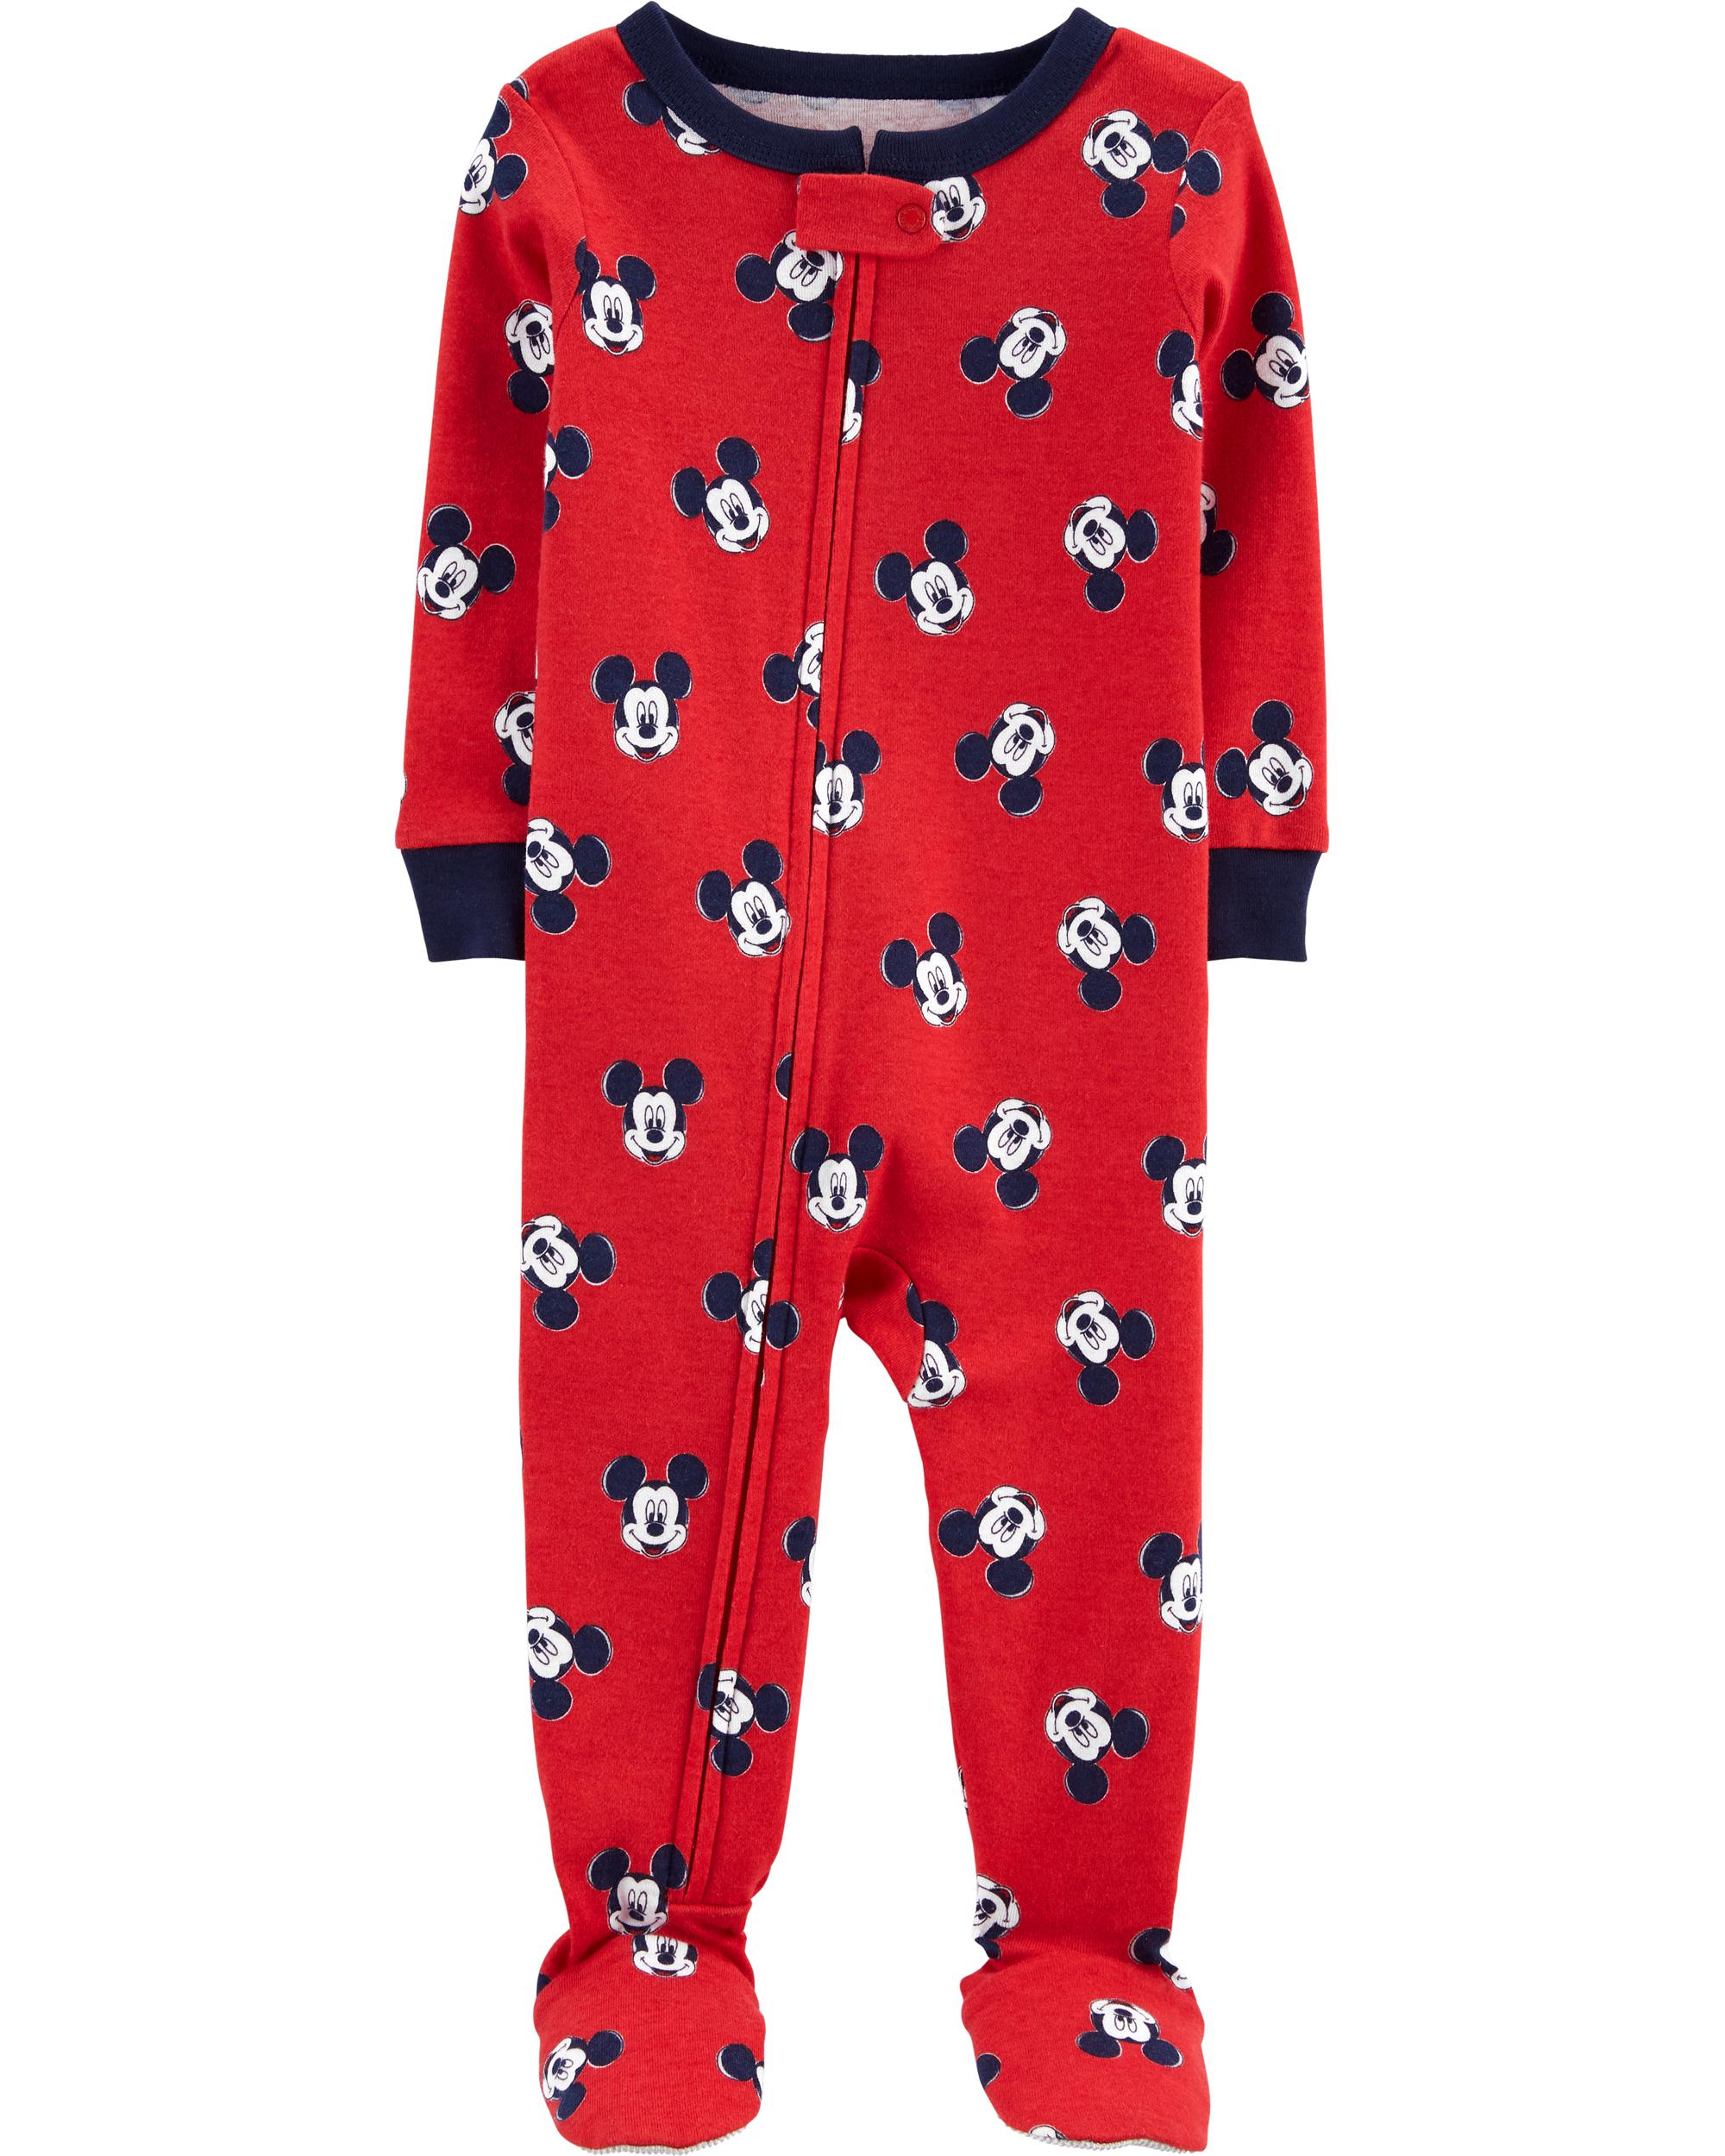 Toddler 1-Piece 100% Snug Fit Cotton Footie Pyjamas